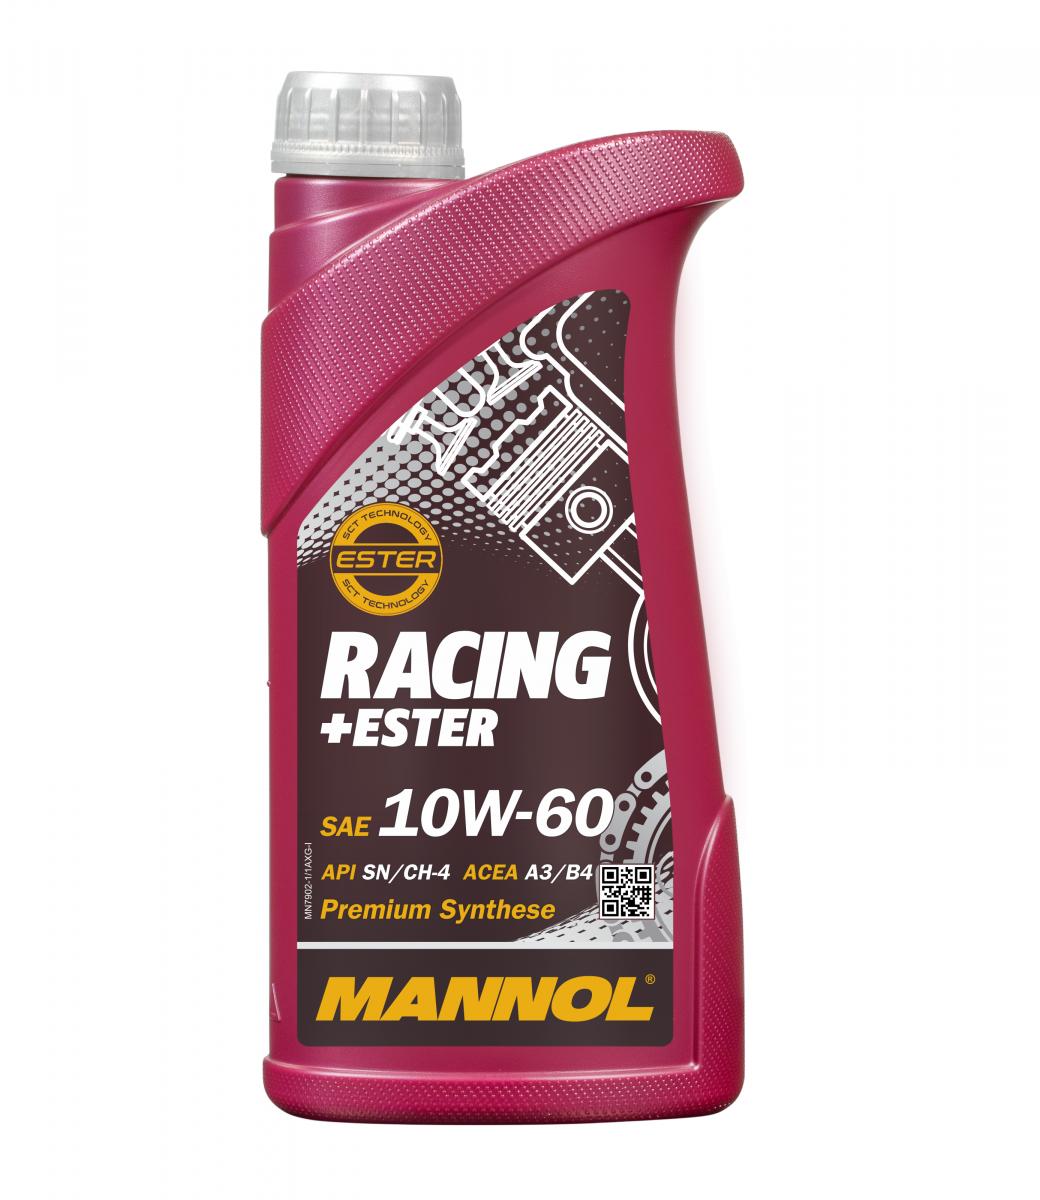 MN Racing+Ester 10W-60